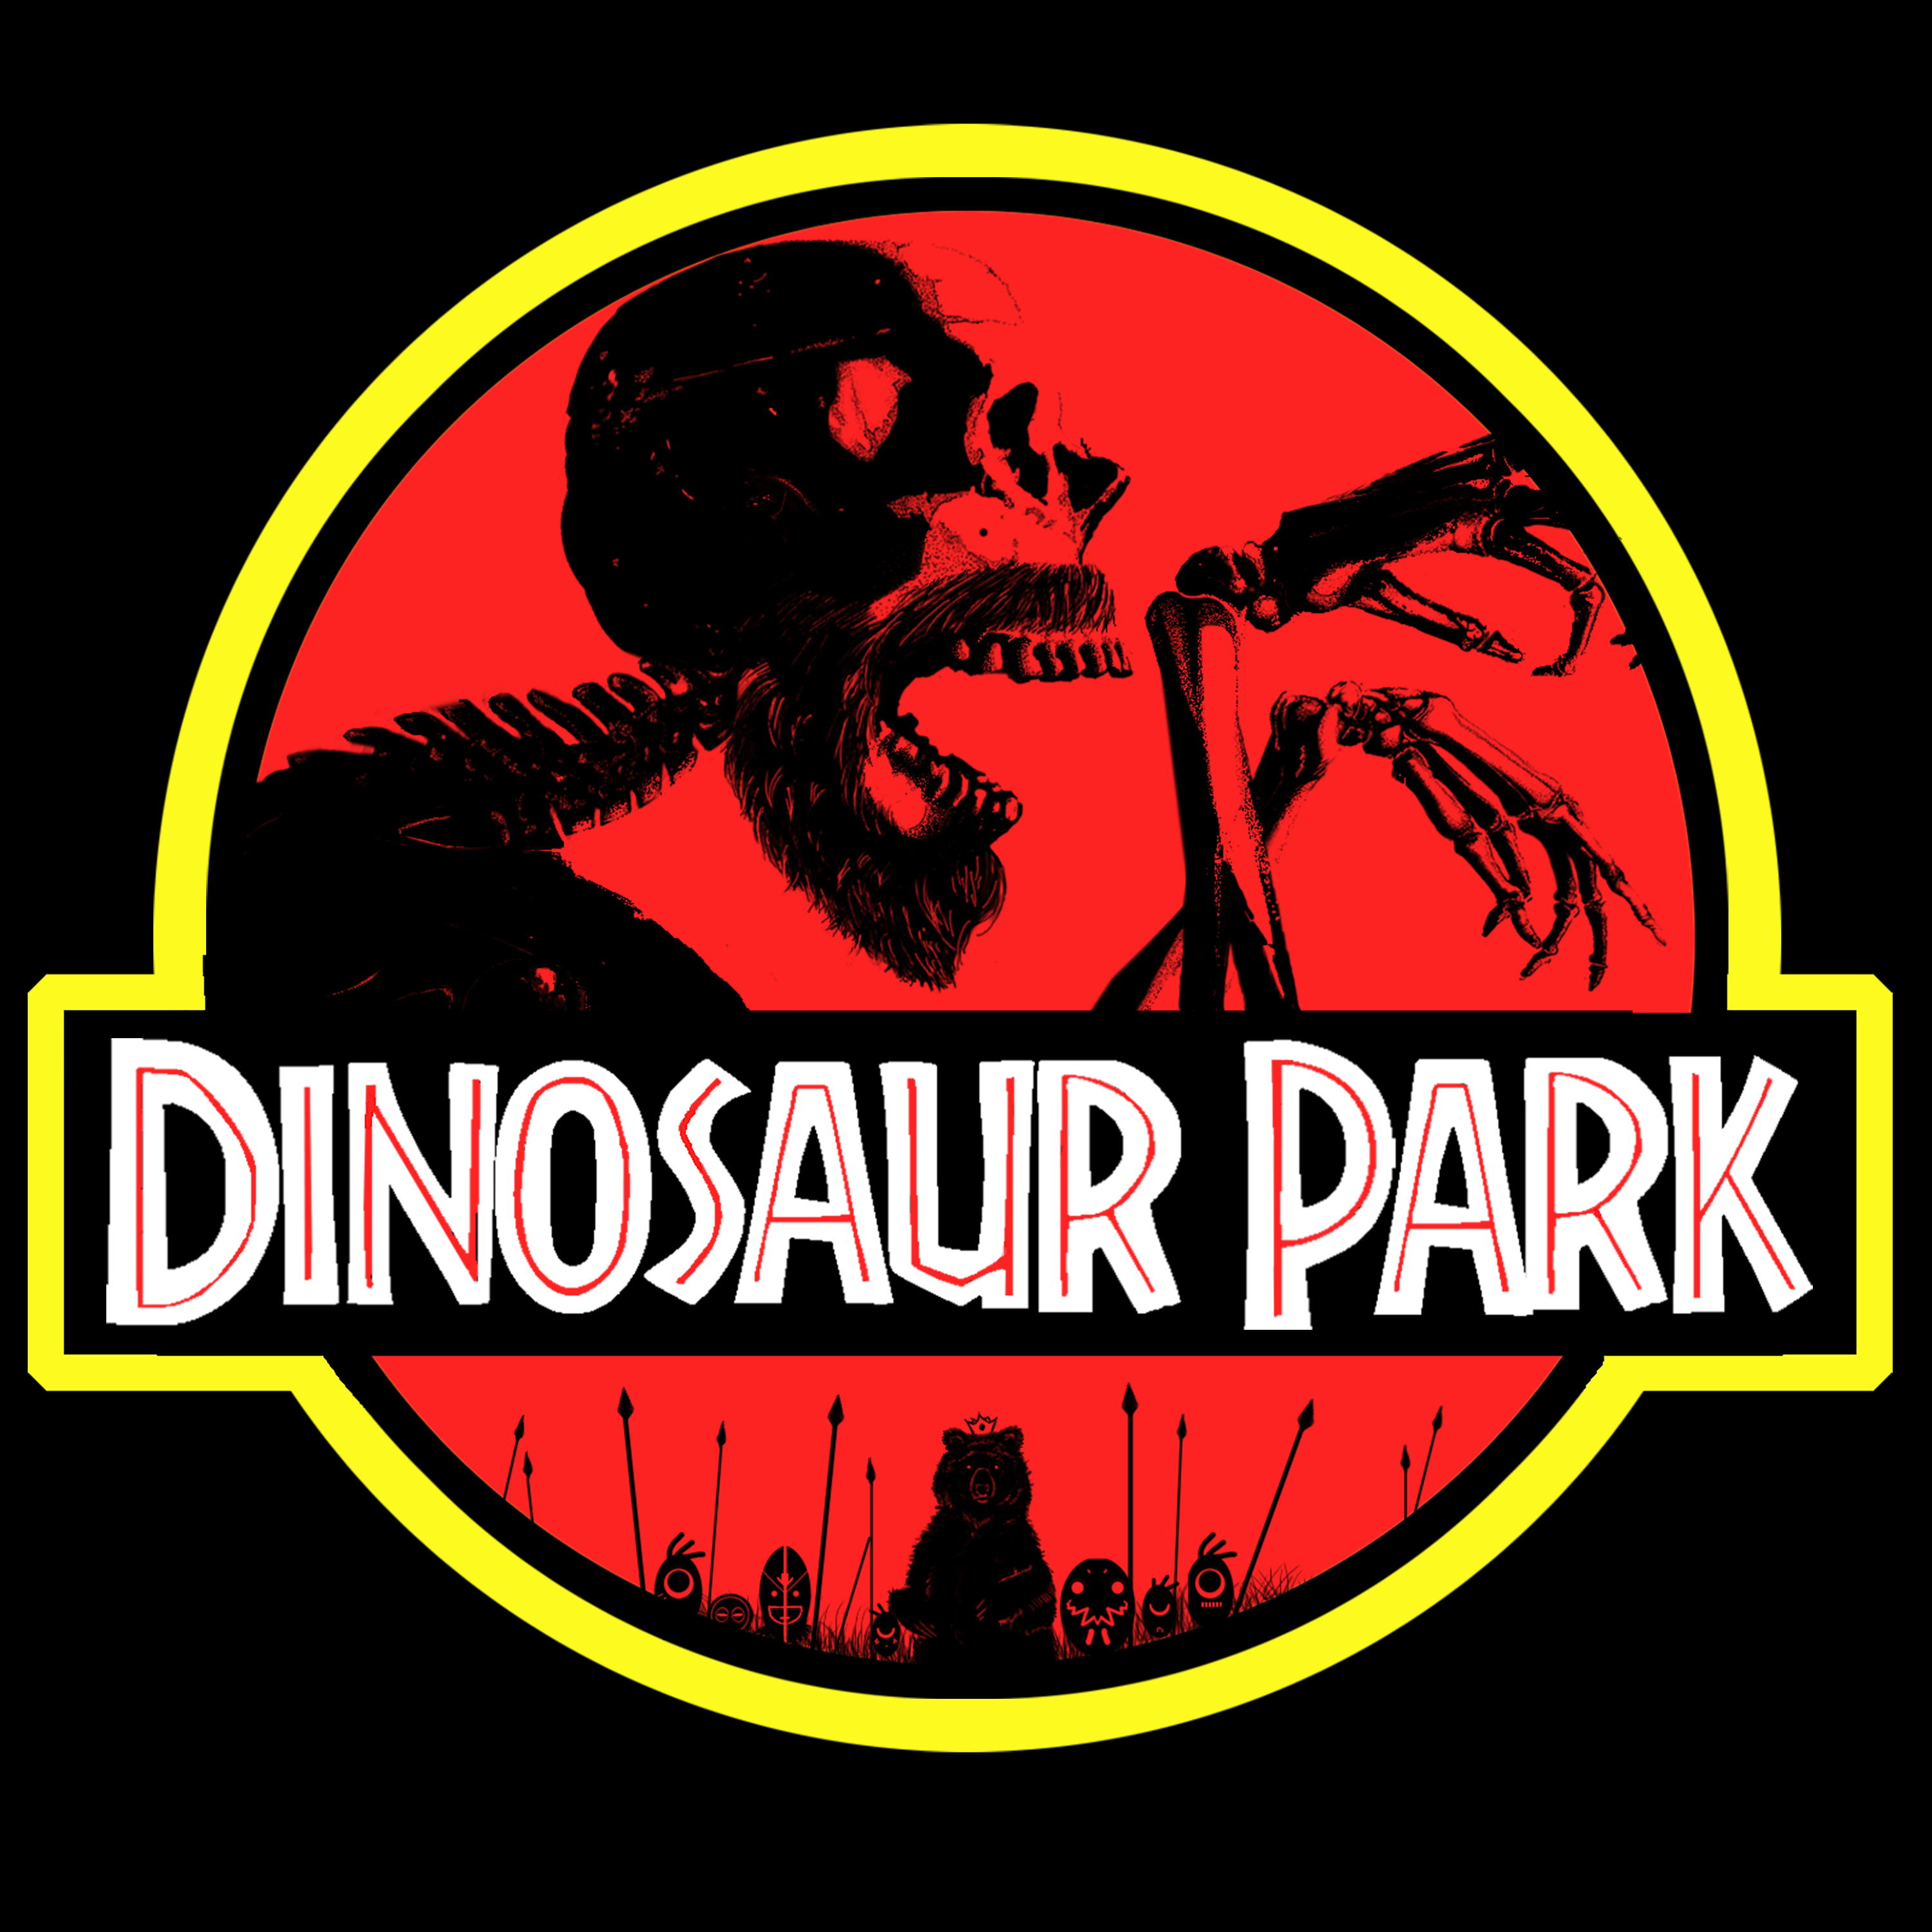 Dinosaur Park #8 Jake’s Place